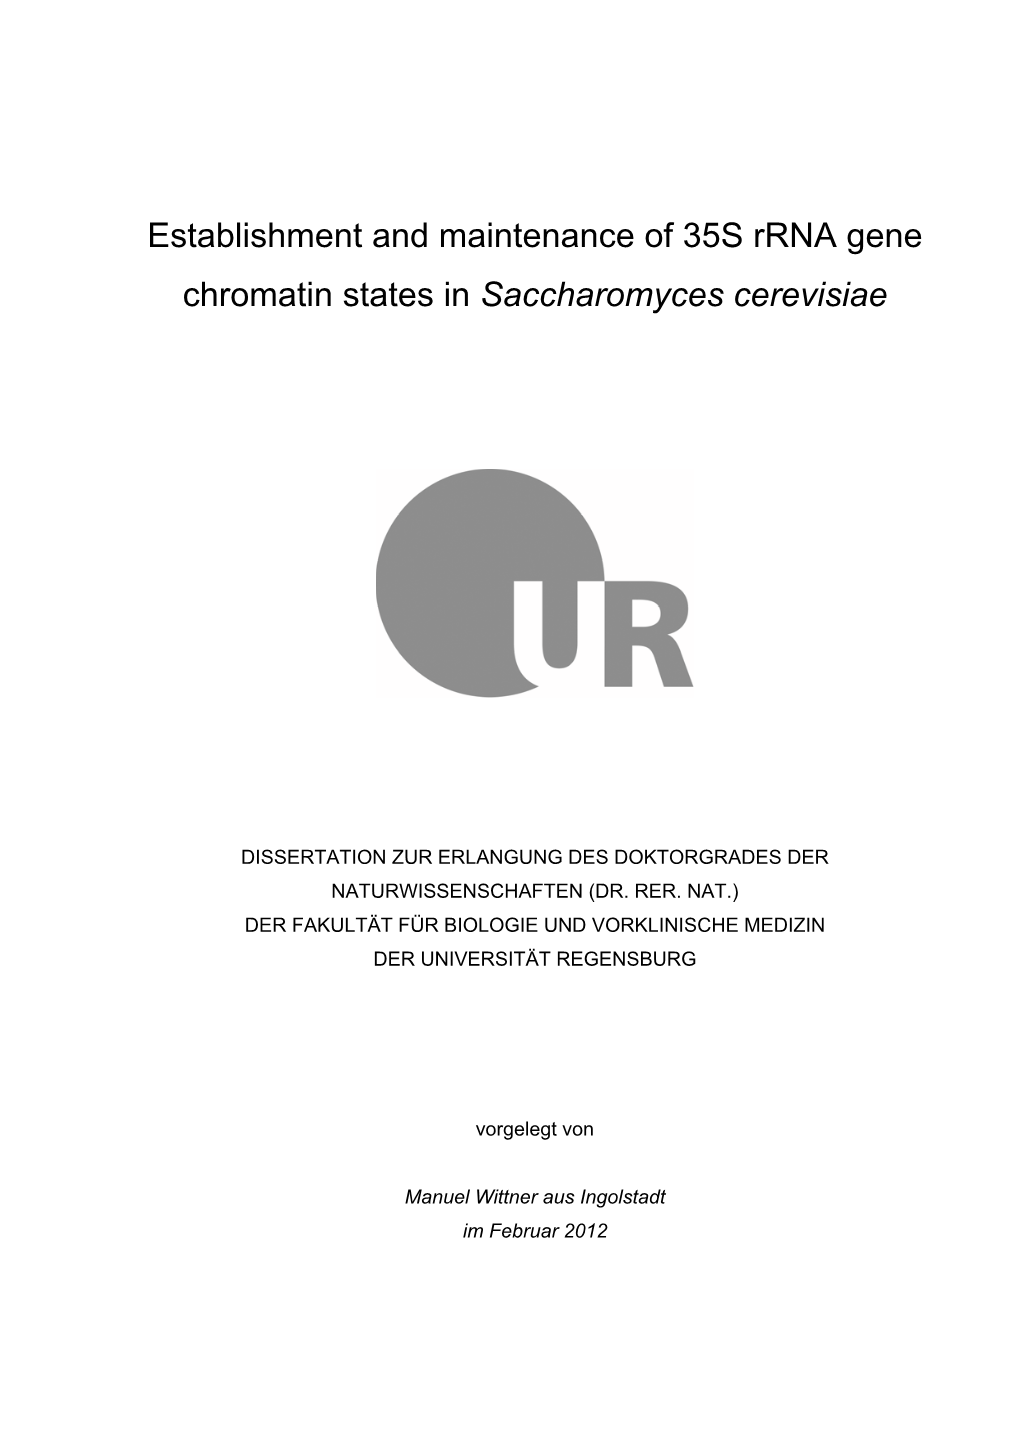 Establishment and Maintenance of 35S Rrna Gene Chromatin States in Saccharomyces Cerevisiae